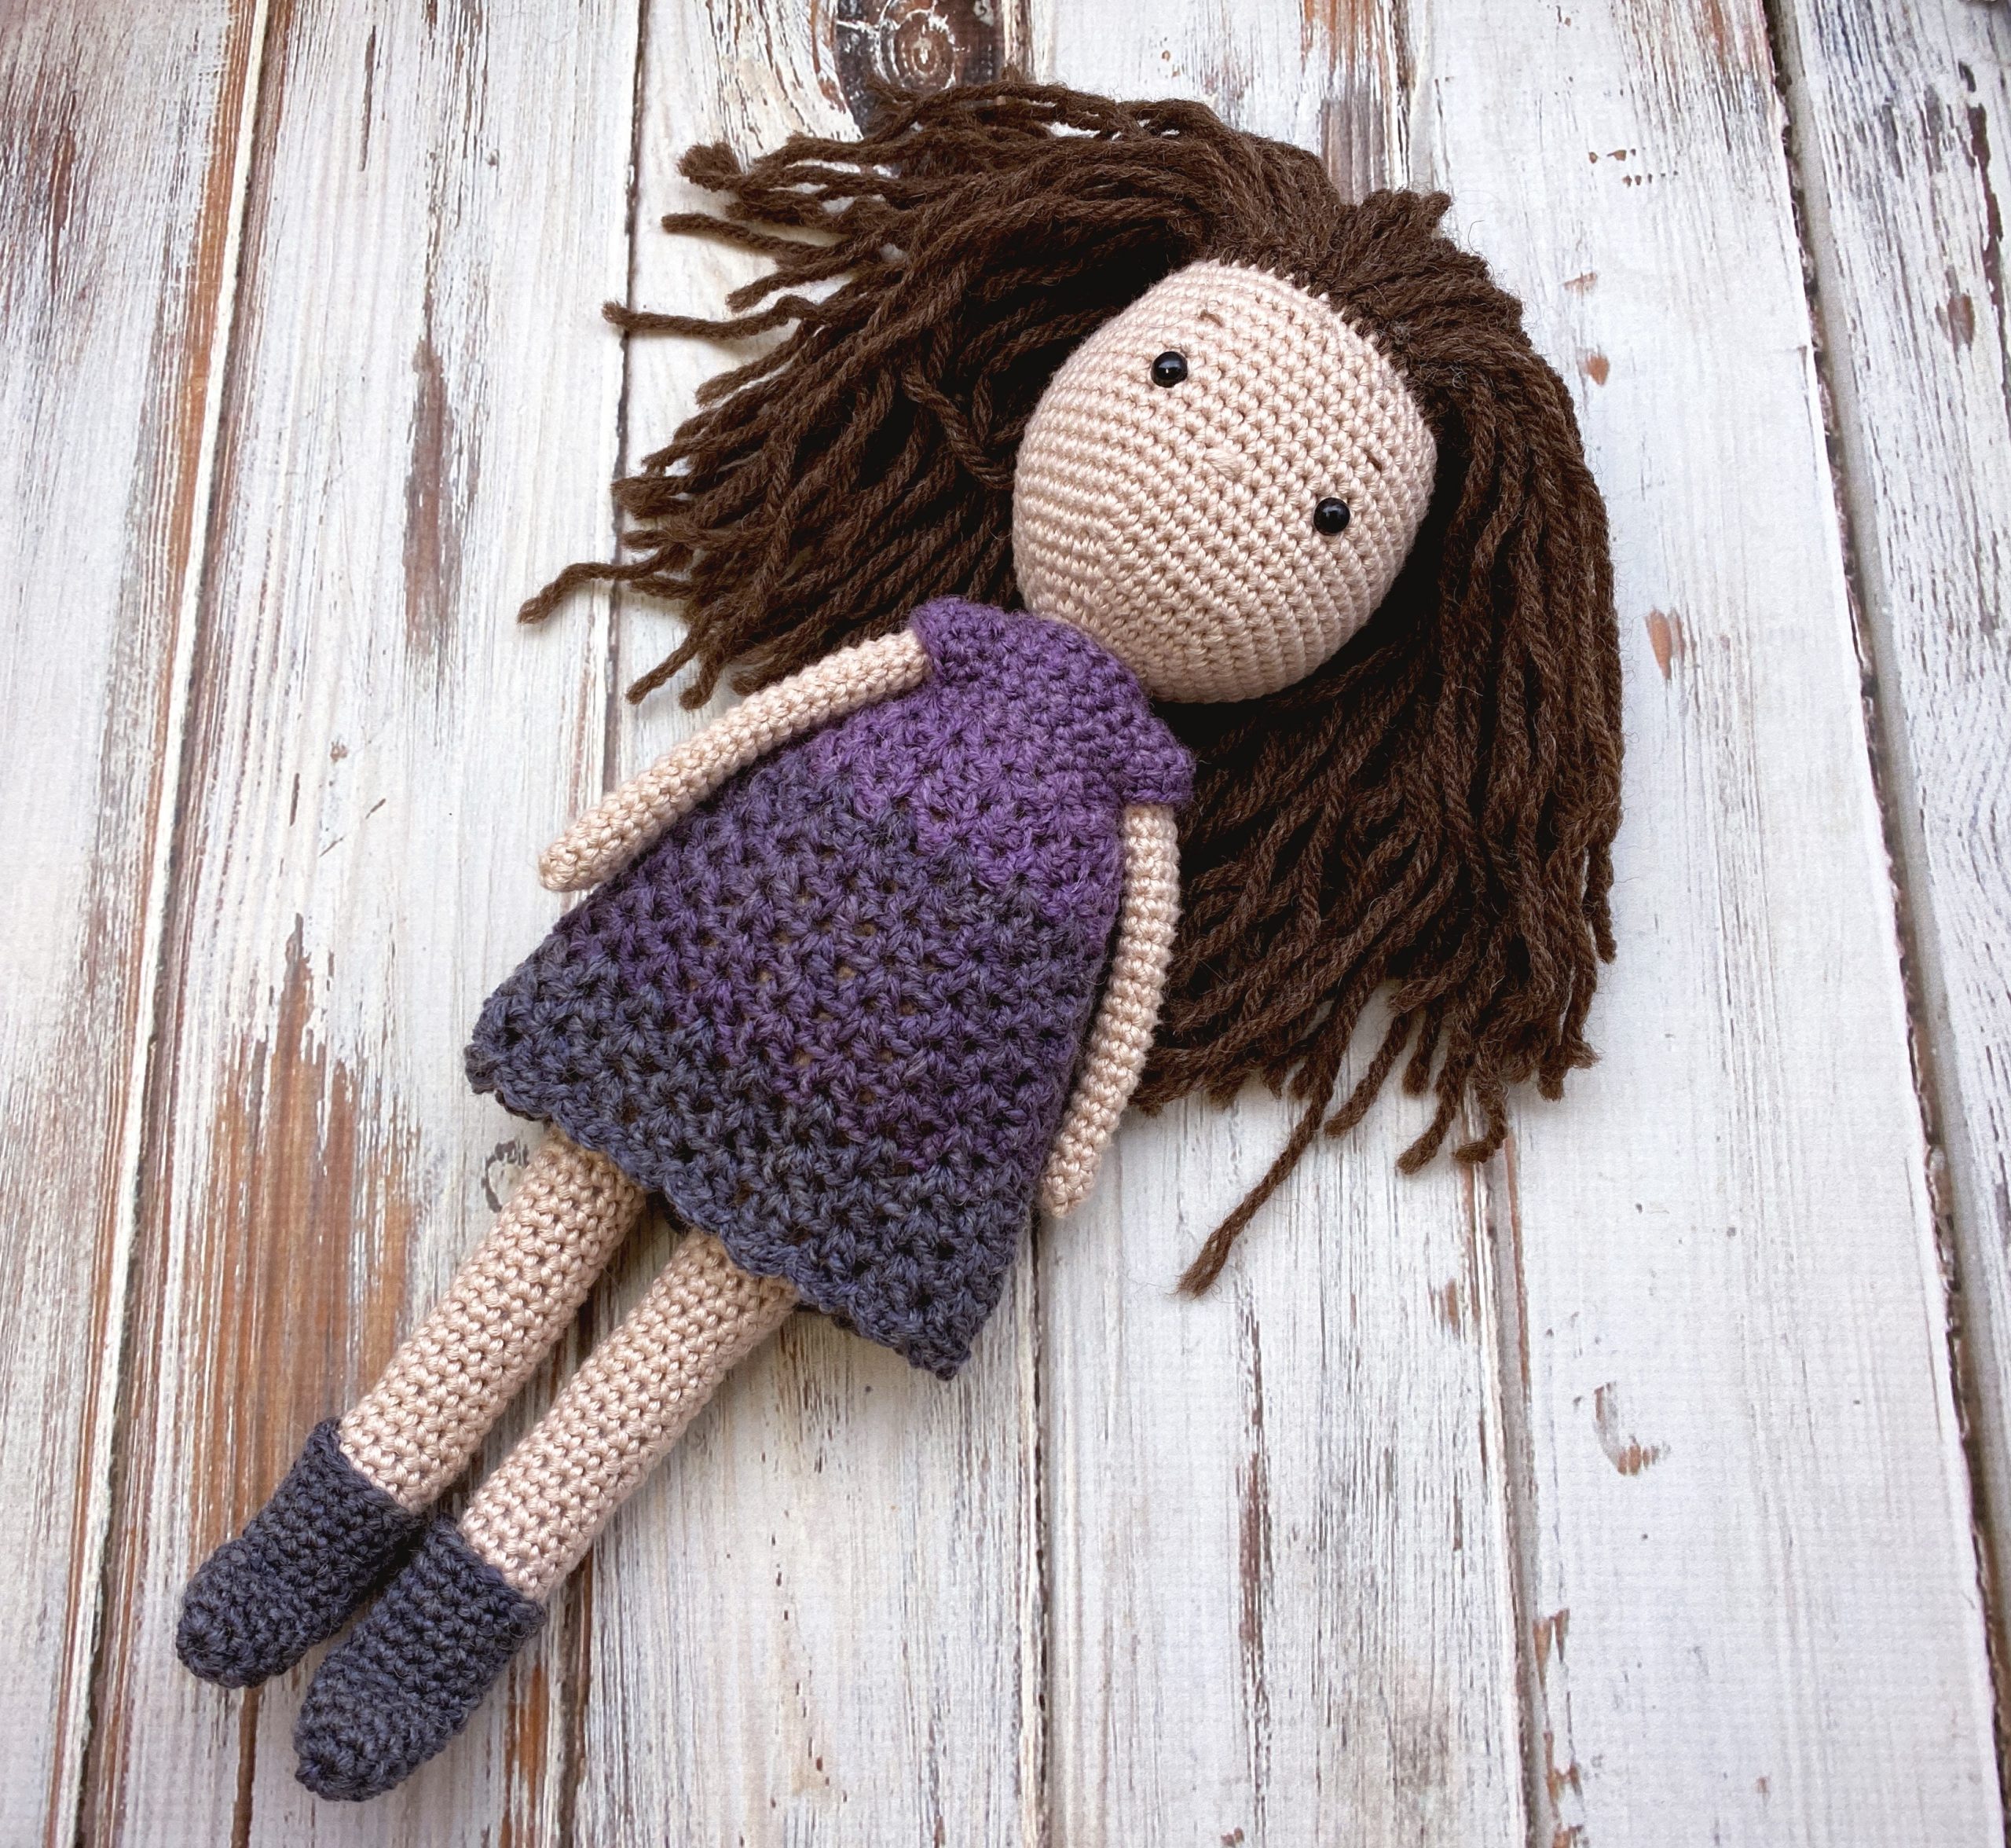 25+ Darling Dolls to Crochet - All Free Patterns! - love. life. yarn.